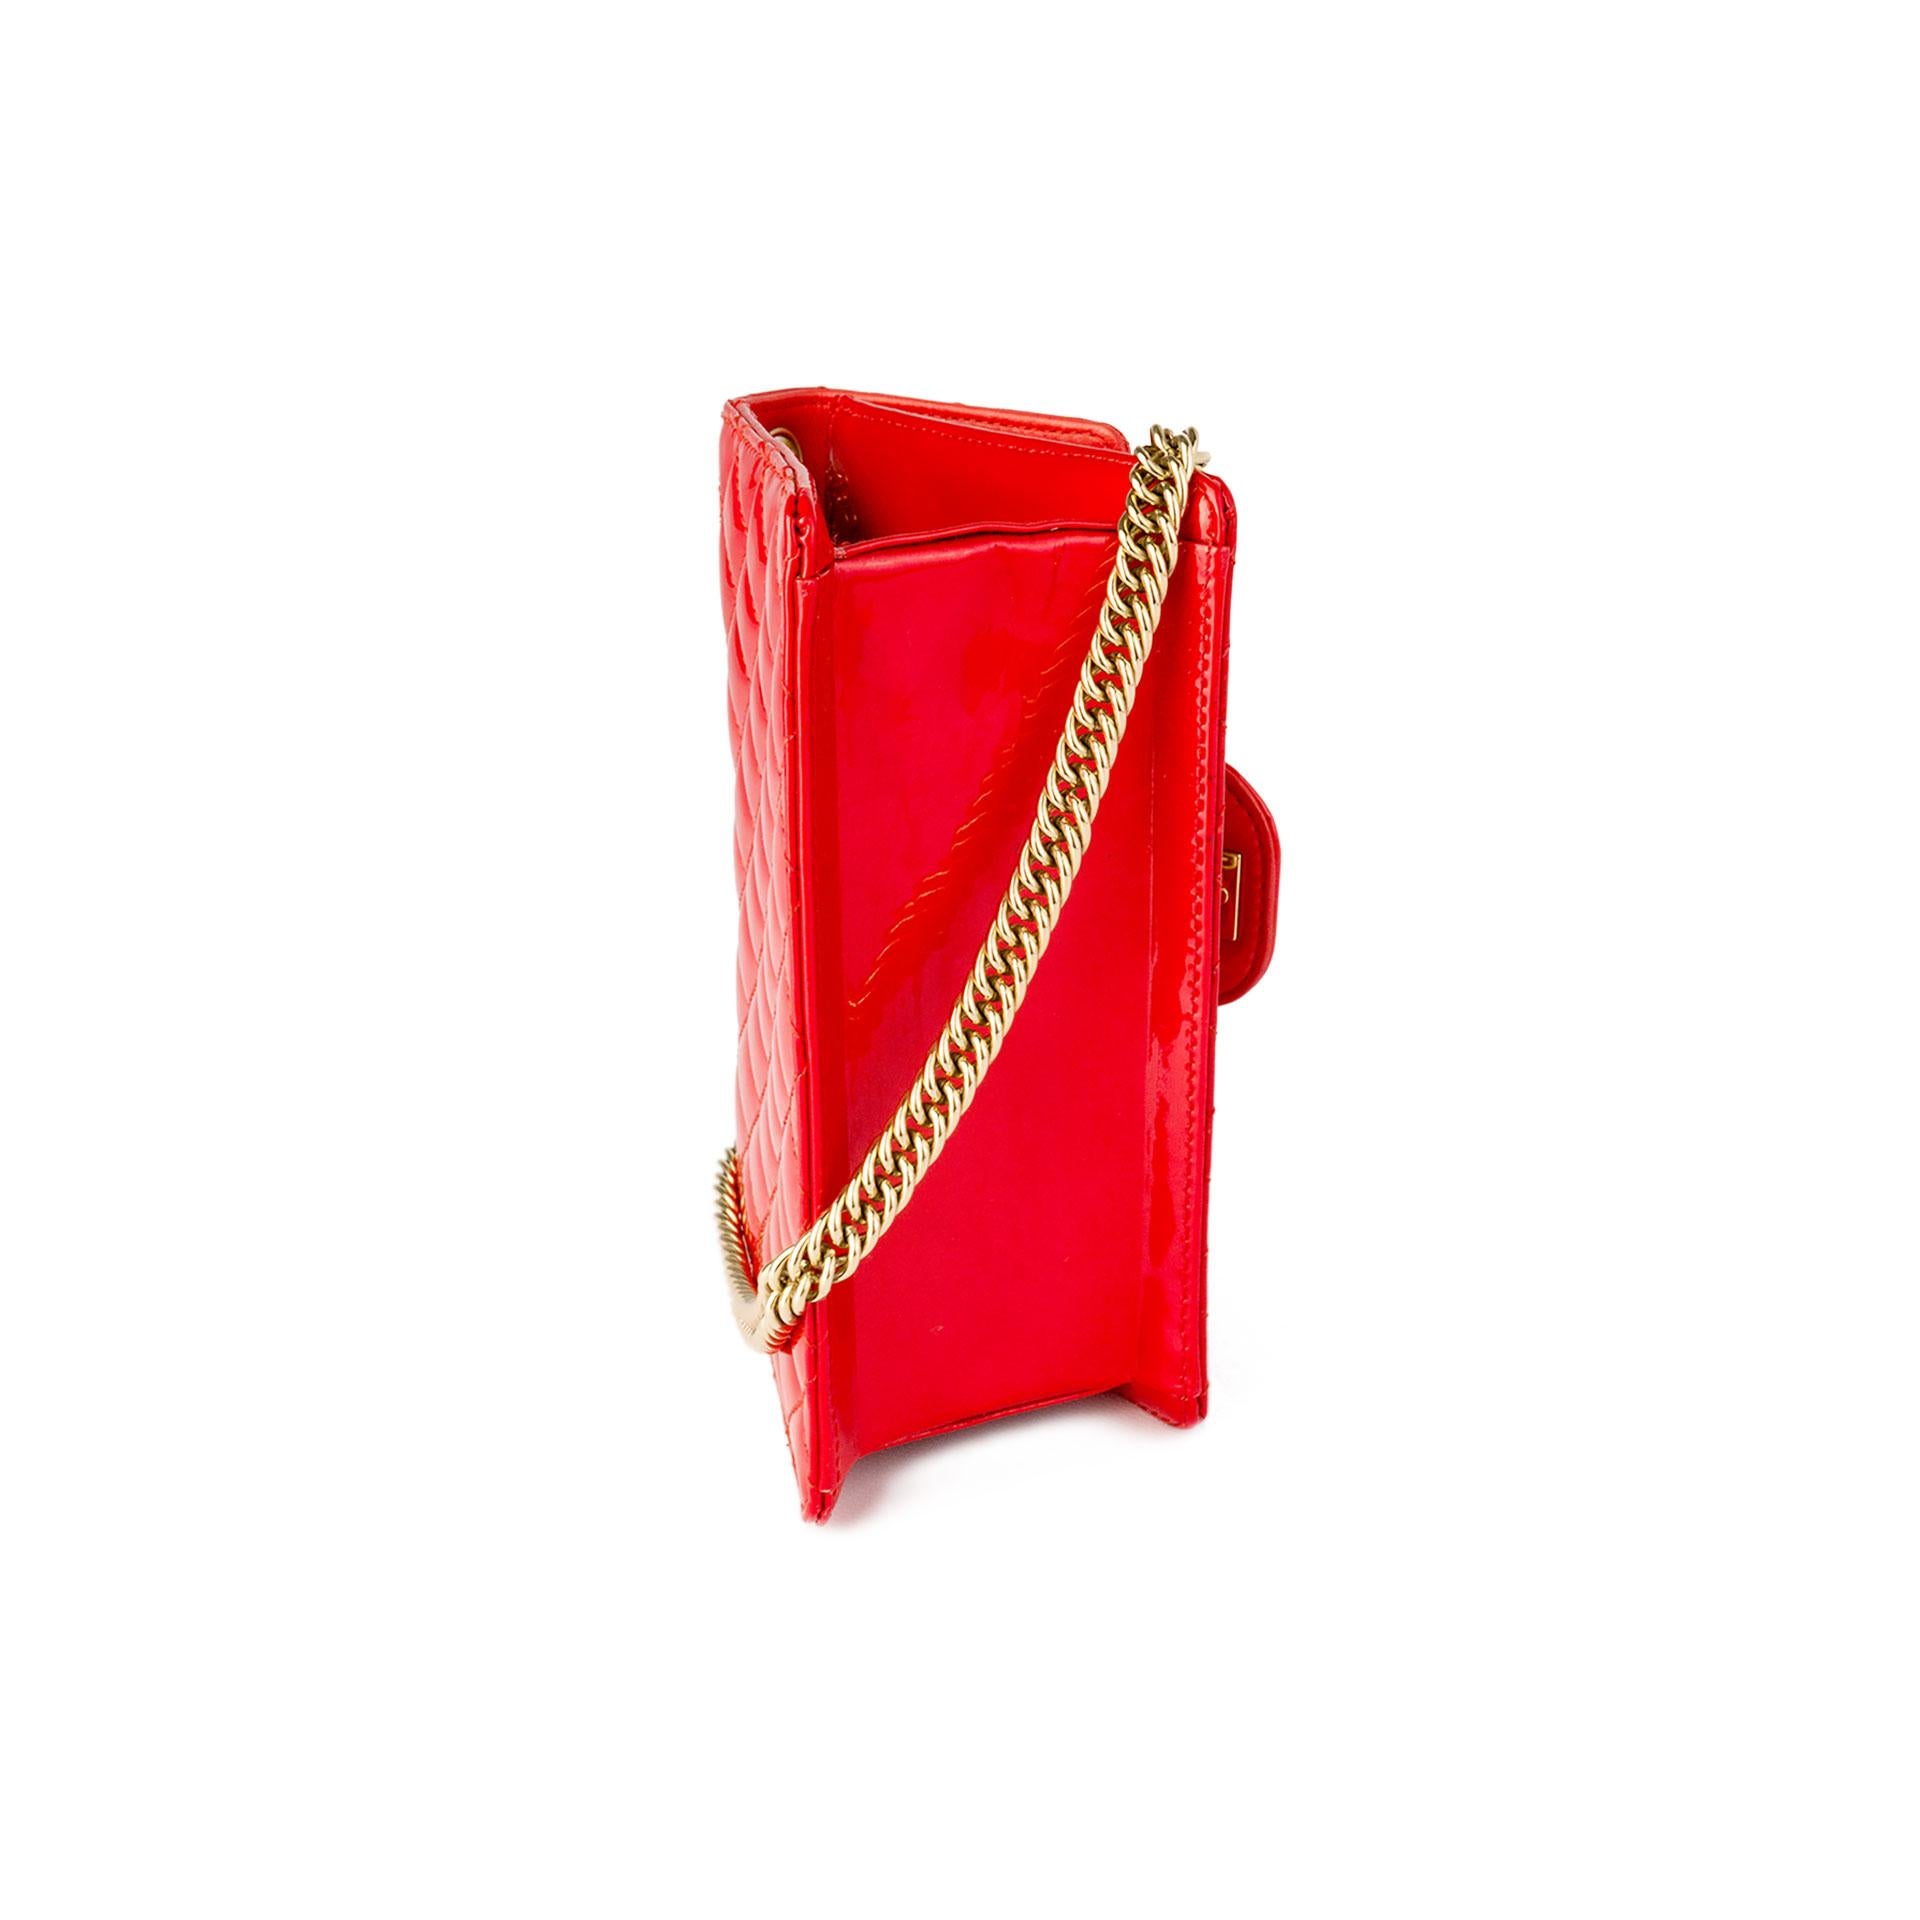 Chanel Bright Red Micro Mini Patent Leather Classic Flap Bag In Good Condition For Sale In Miami, FL